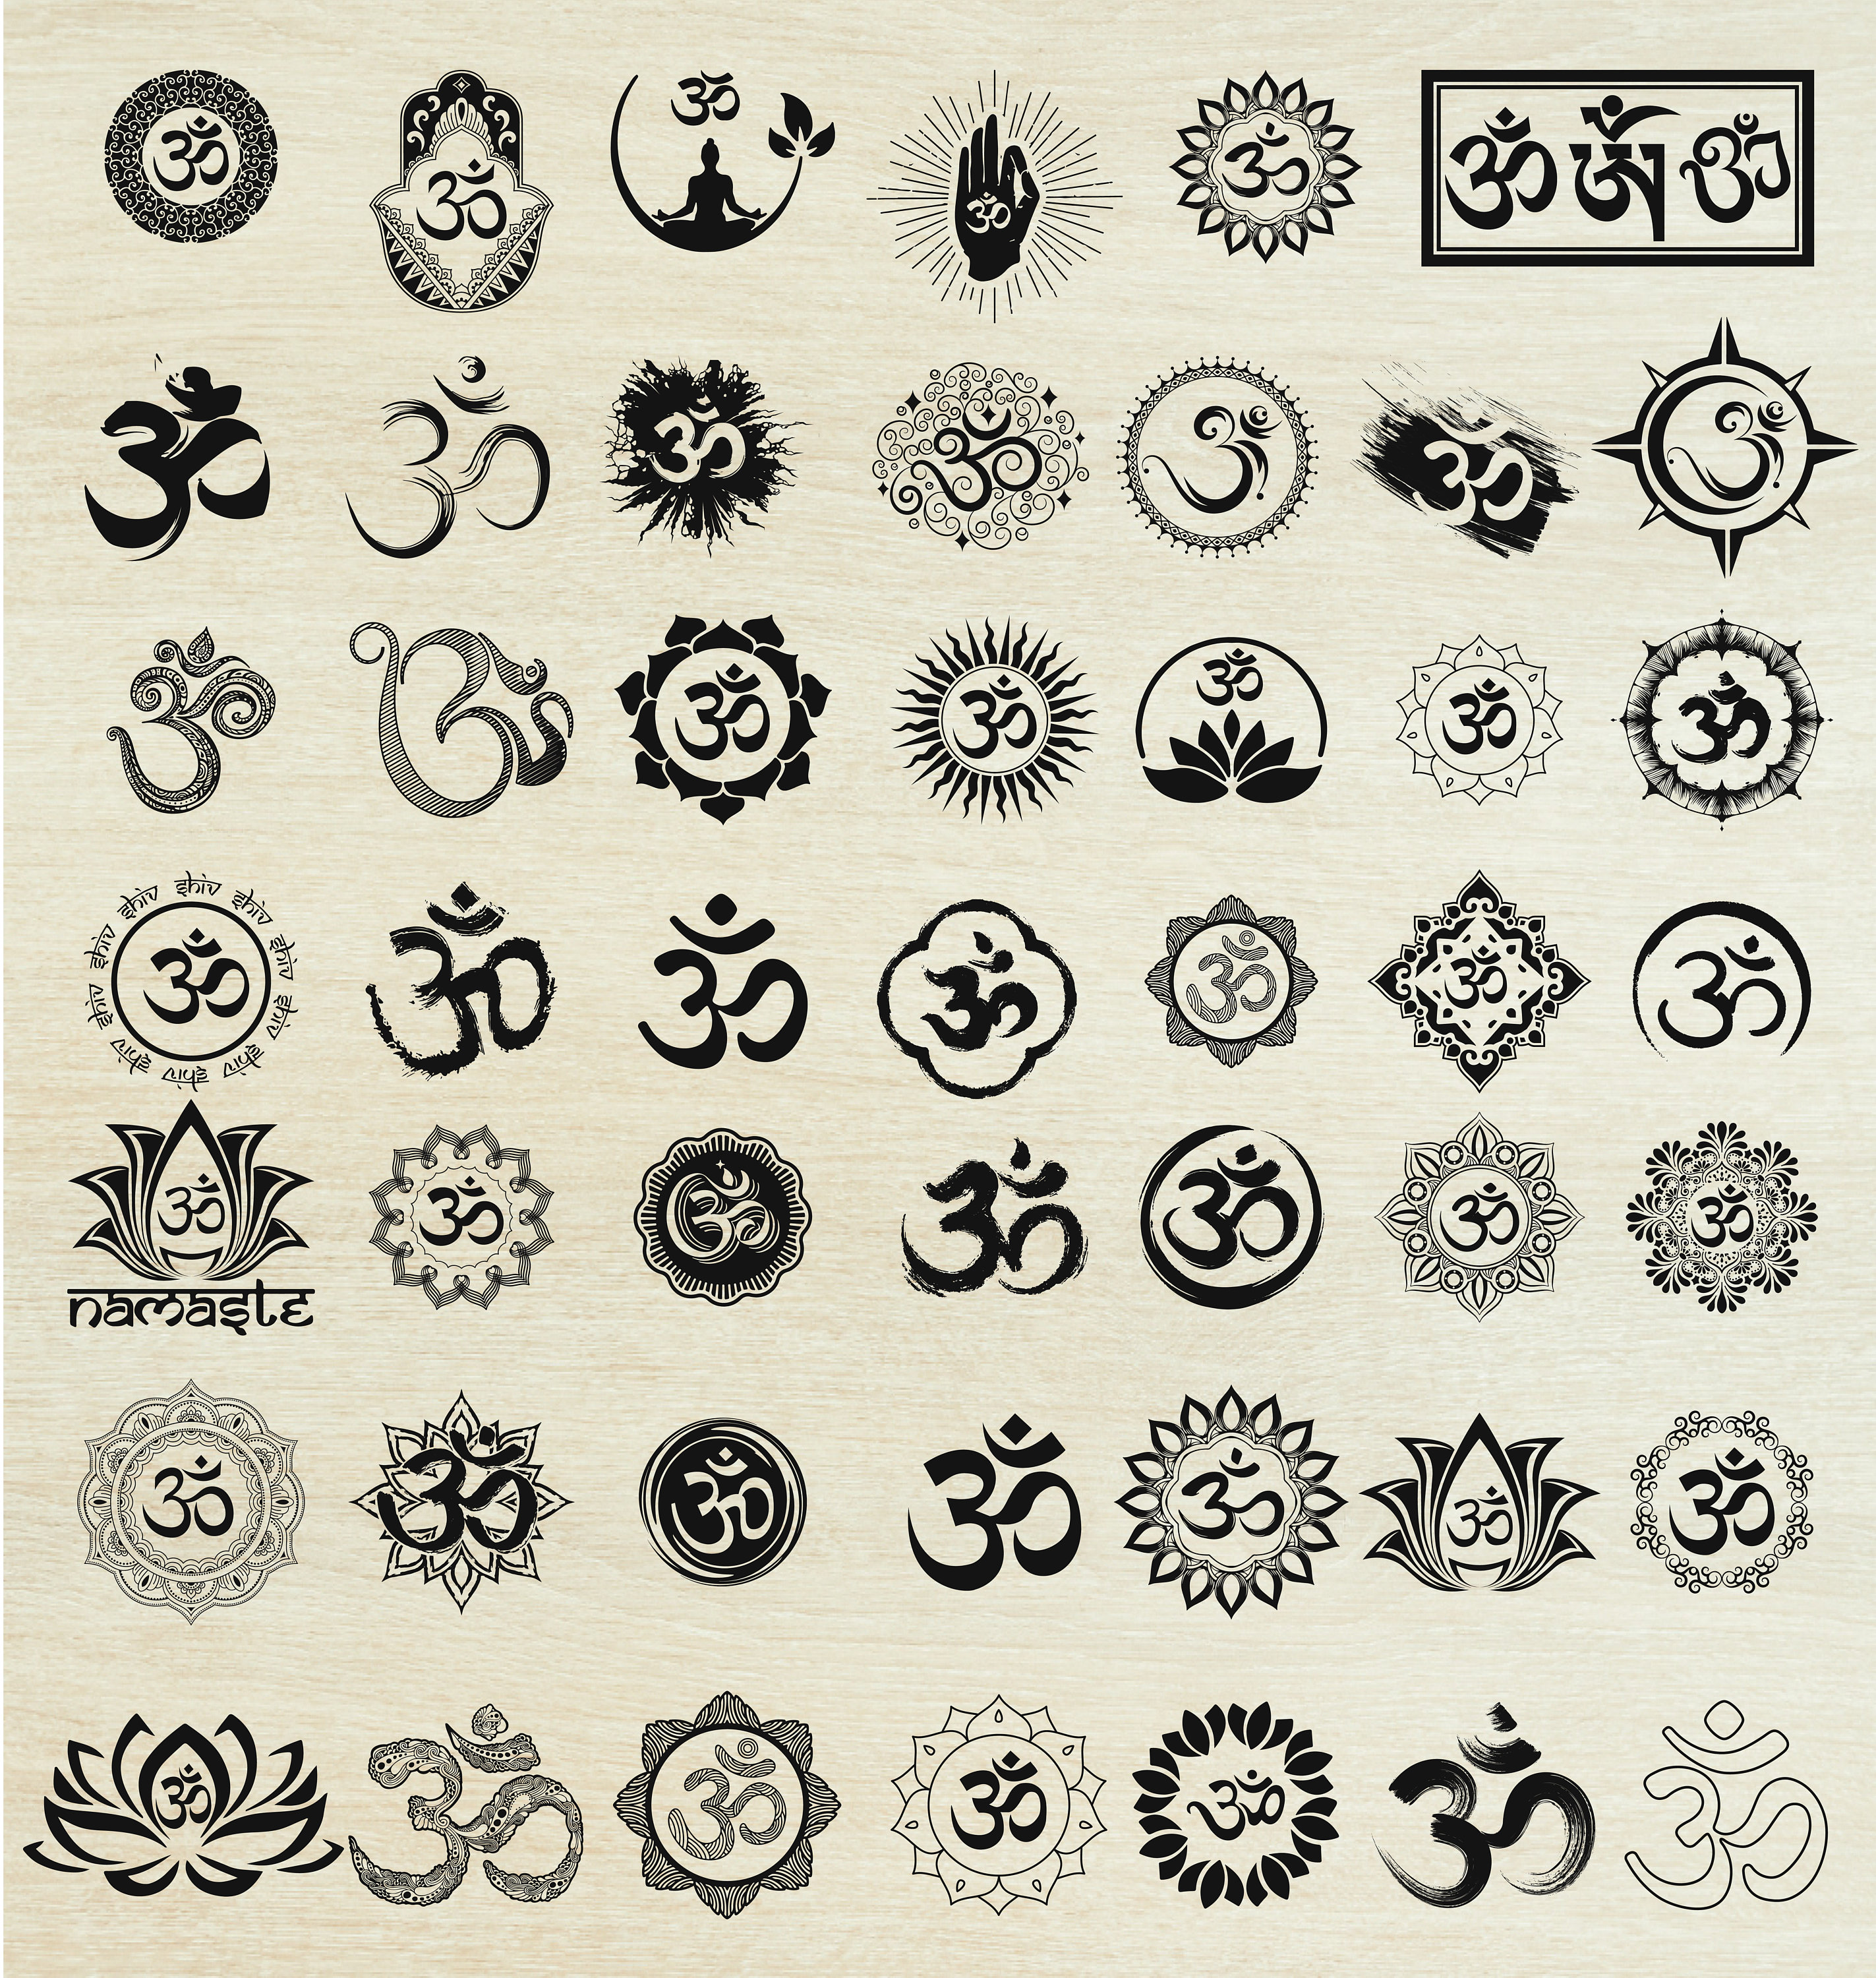 Vector Art of Twelve Dreams Jainism Jain Religion Namokar Mantra Cdr X6  Stock Vector - Illustration of religion, vector: 309374851